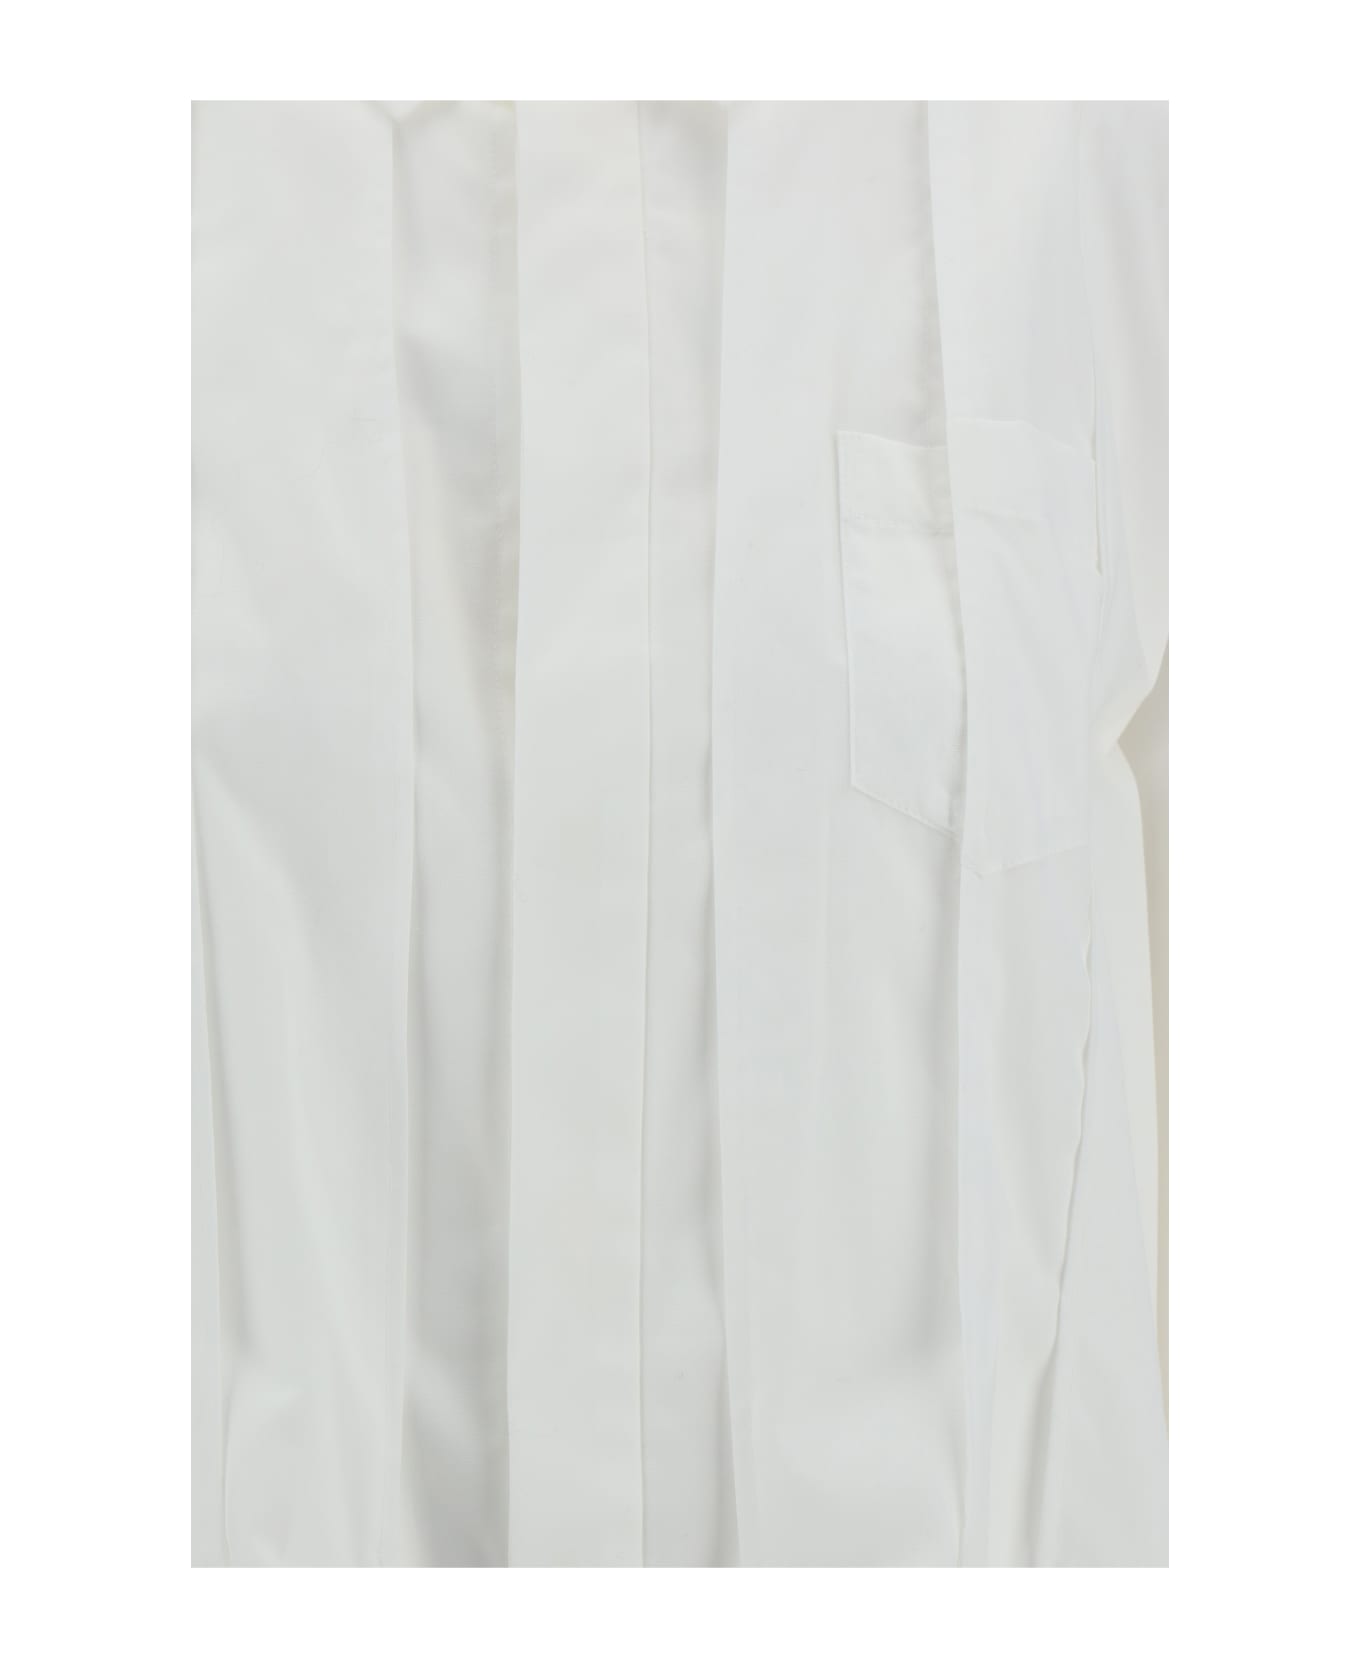 Sacai Poplin Shirt - Off White